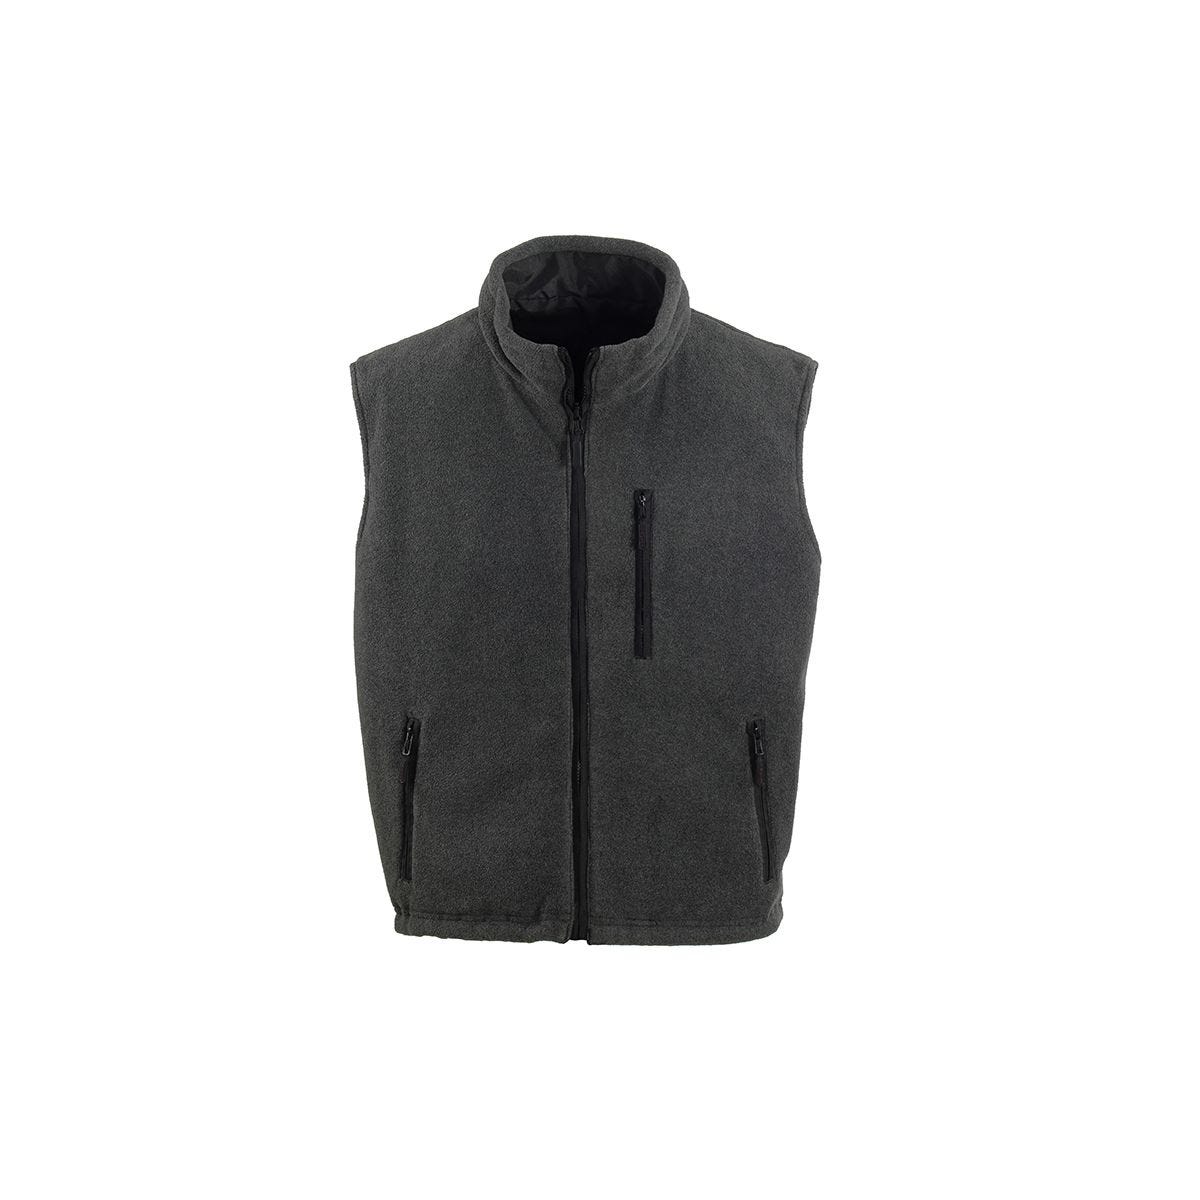 CARISTE Gilet Froid réversible noir, Polyester Oxford + Polaire 280g/m² - Coverguard - Taille 2XL 1